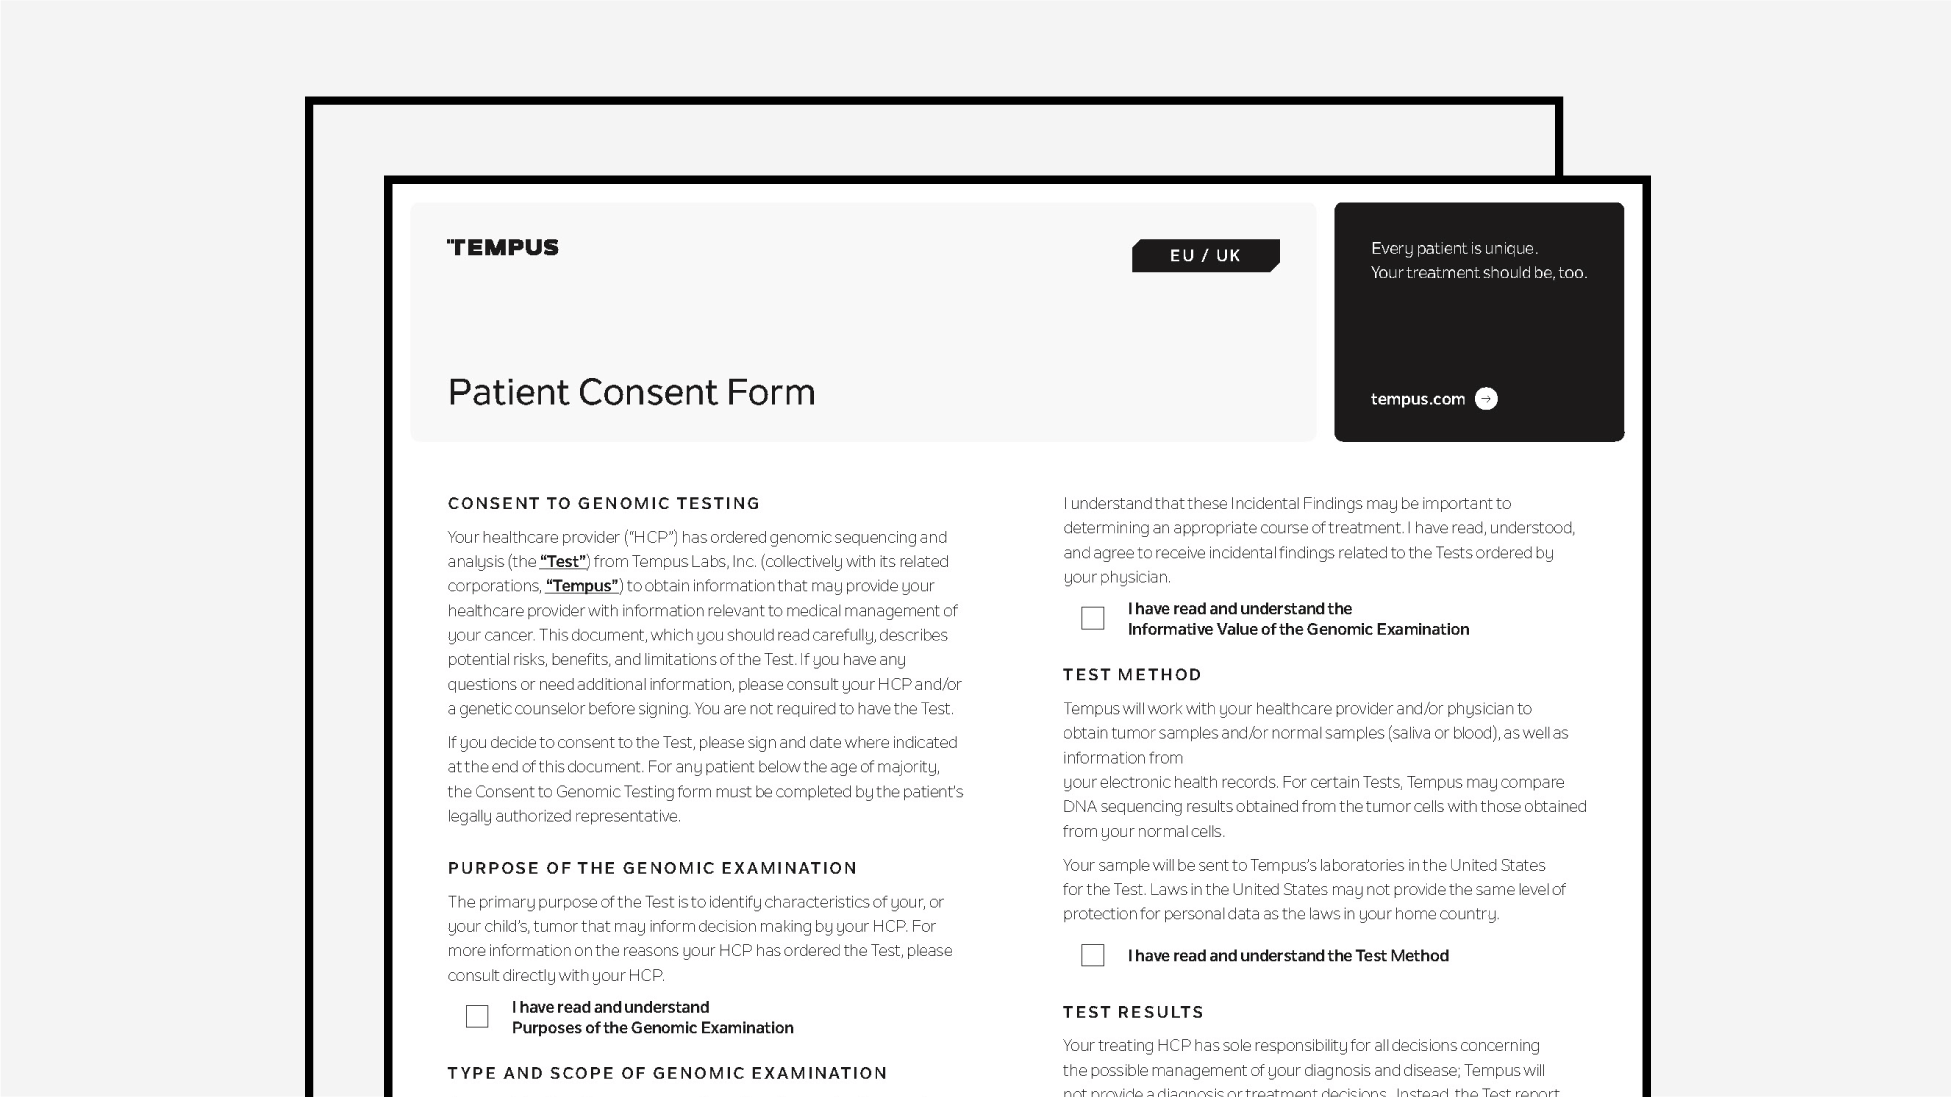 Patient Consent Form (EU/UK)